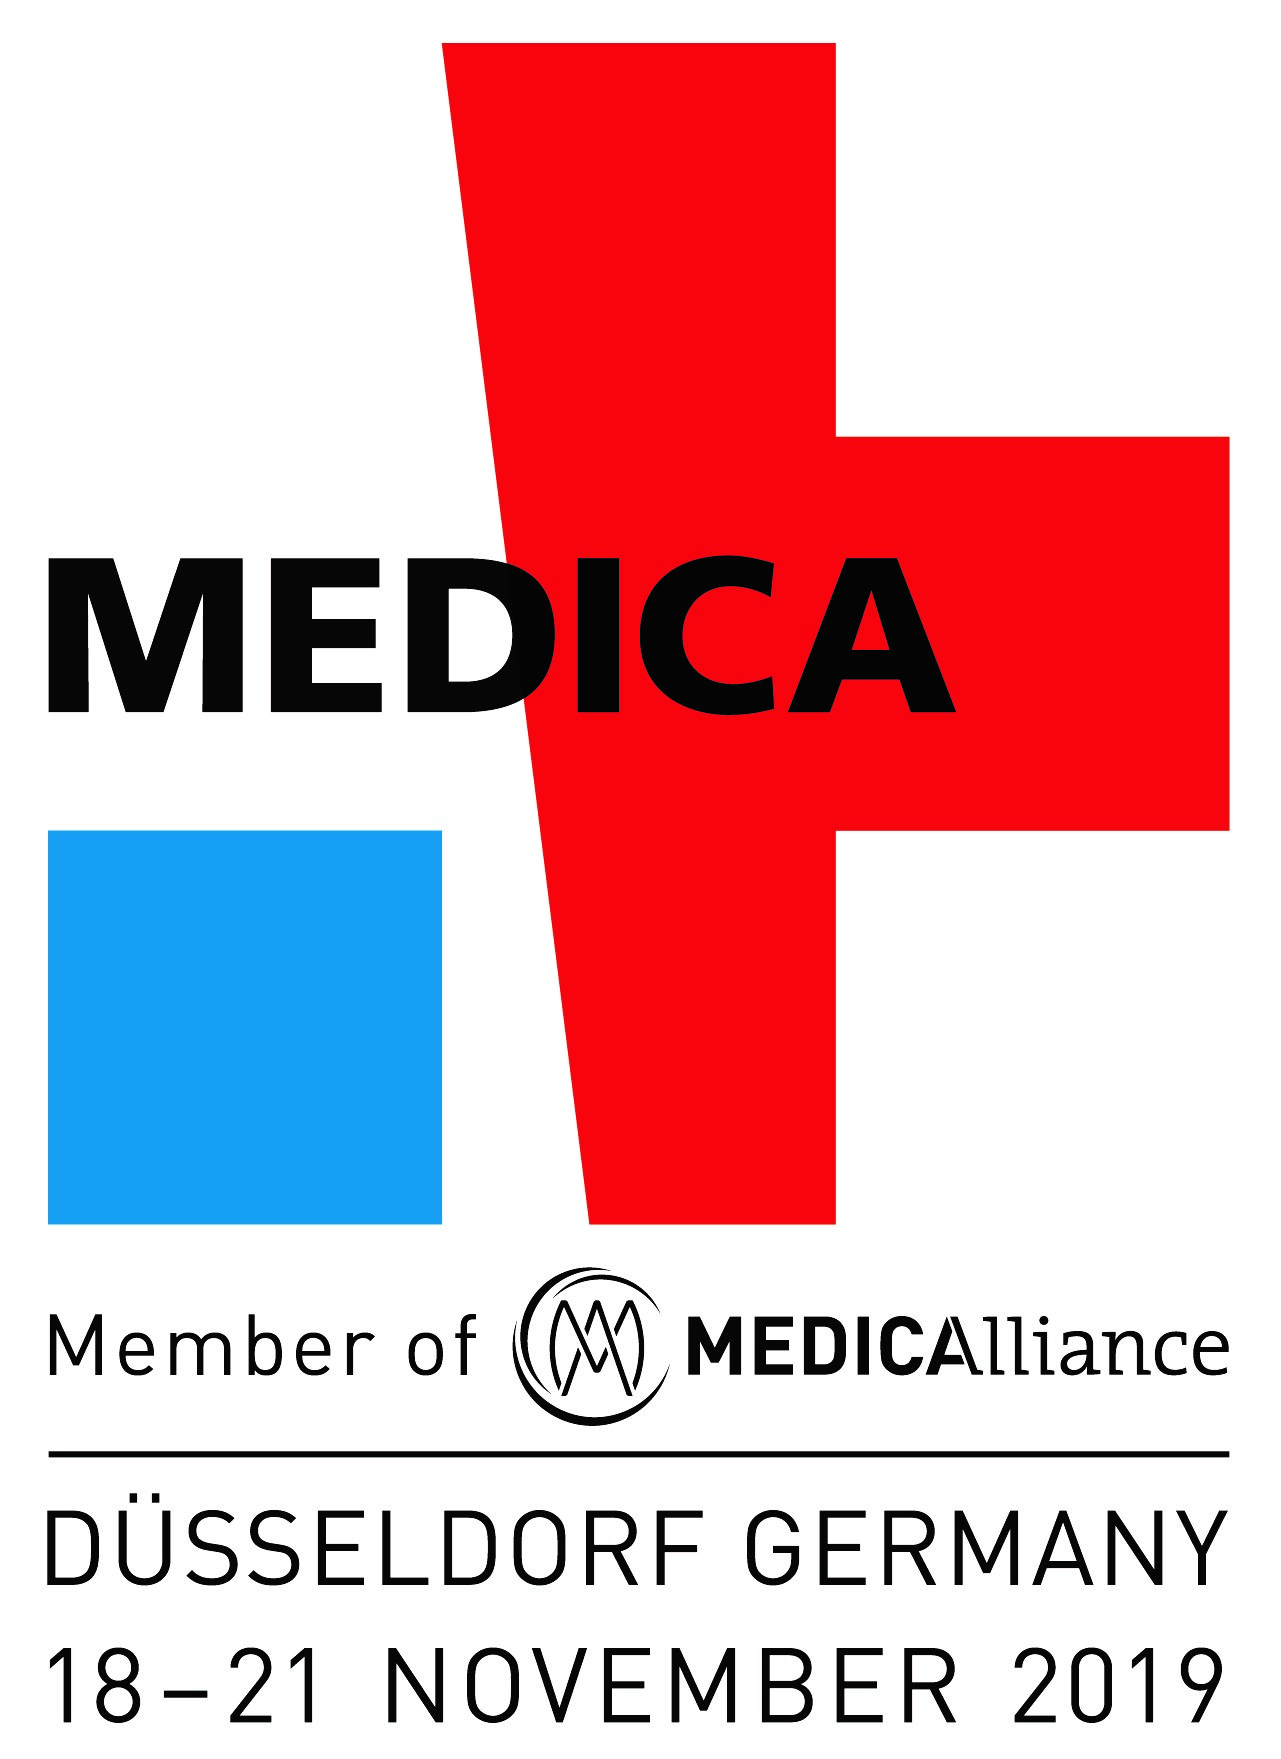 Medica 2019 Logo Nuance Dragon Medical